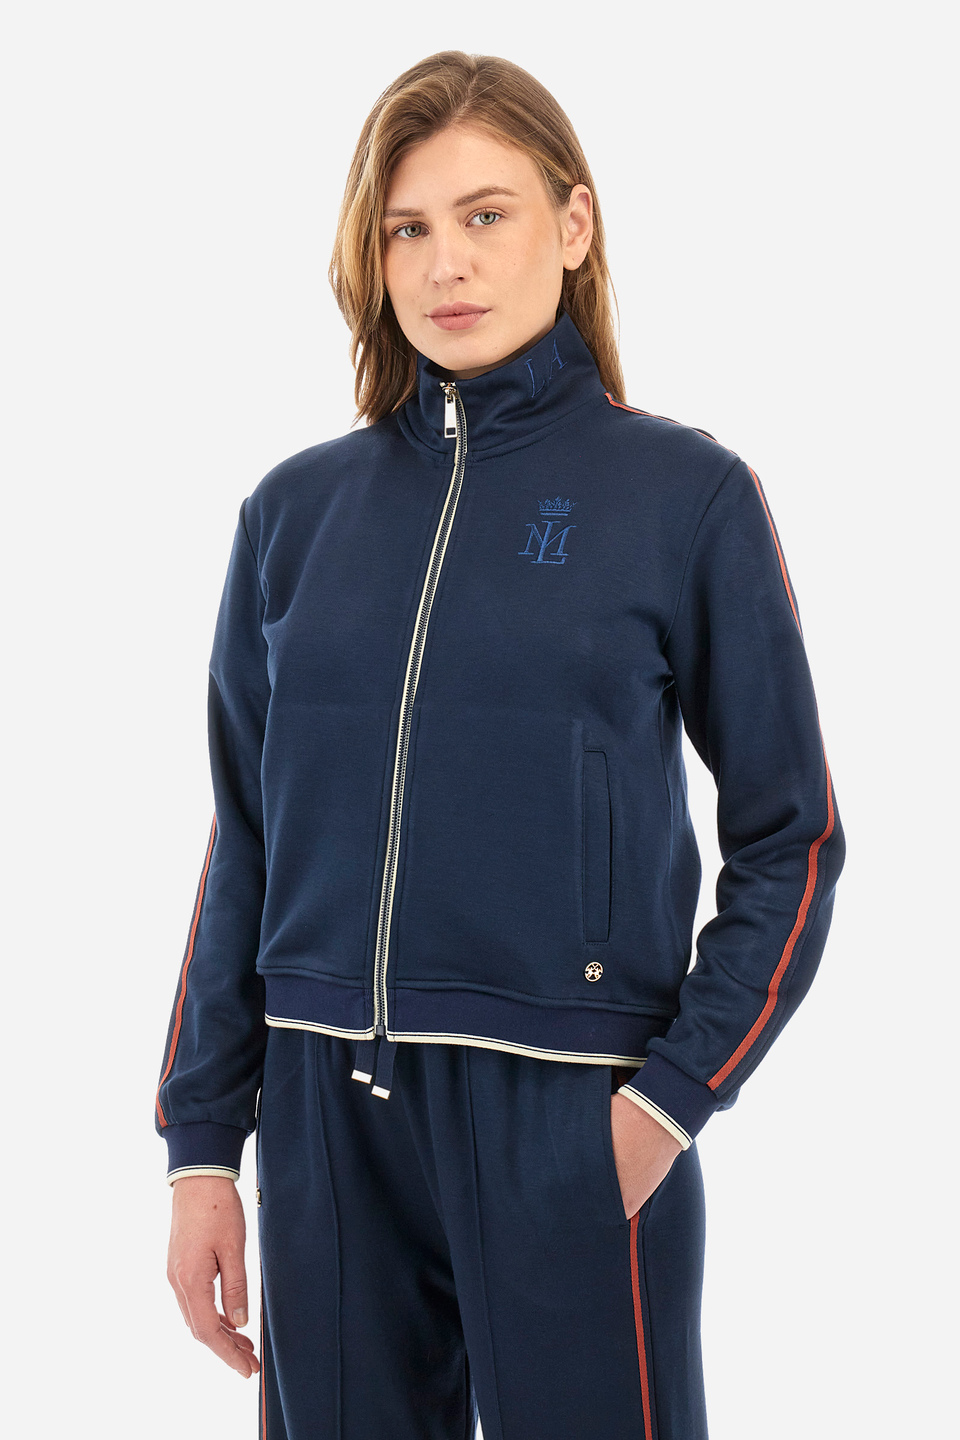 Damen-Sweatshirt Regular Fit - Yancee | La Martina - Official Online Shop